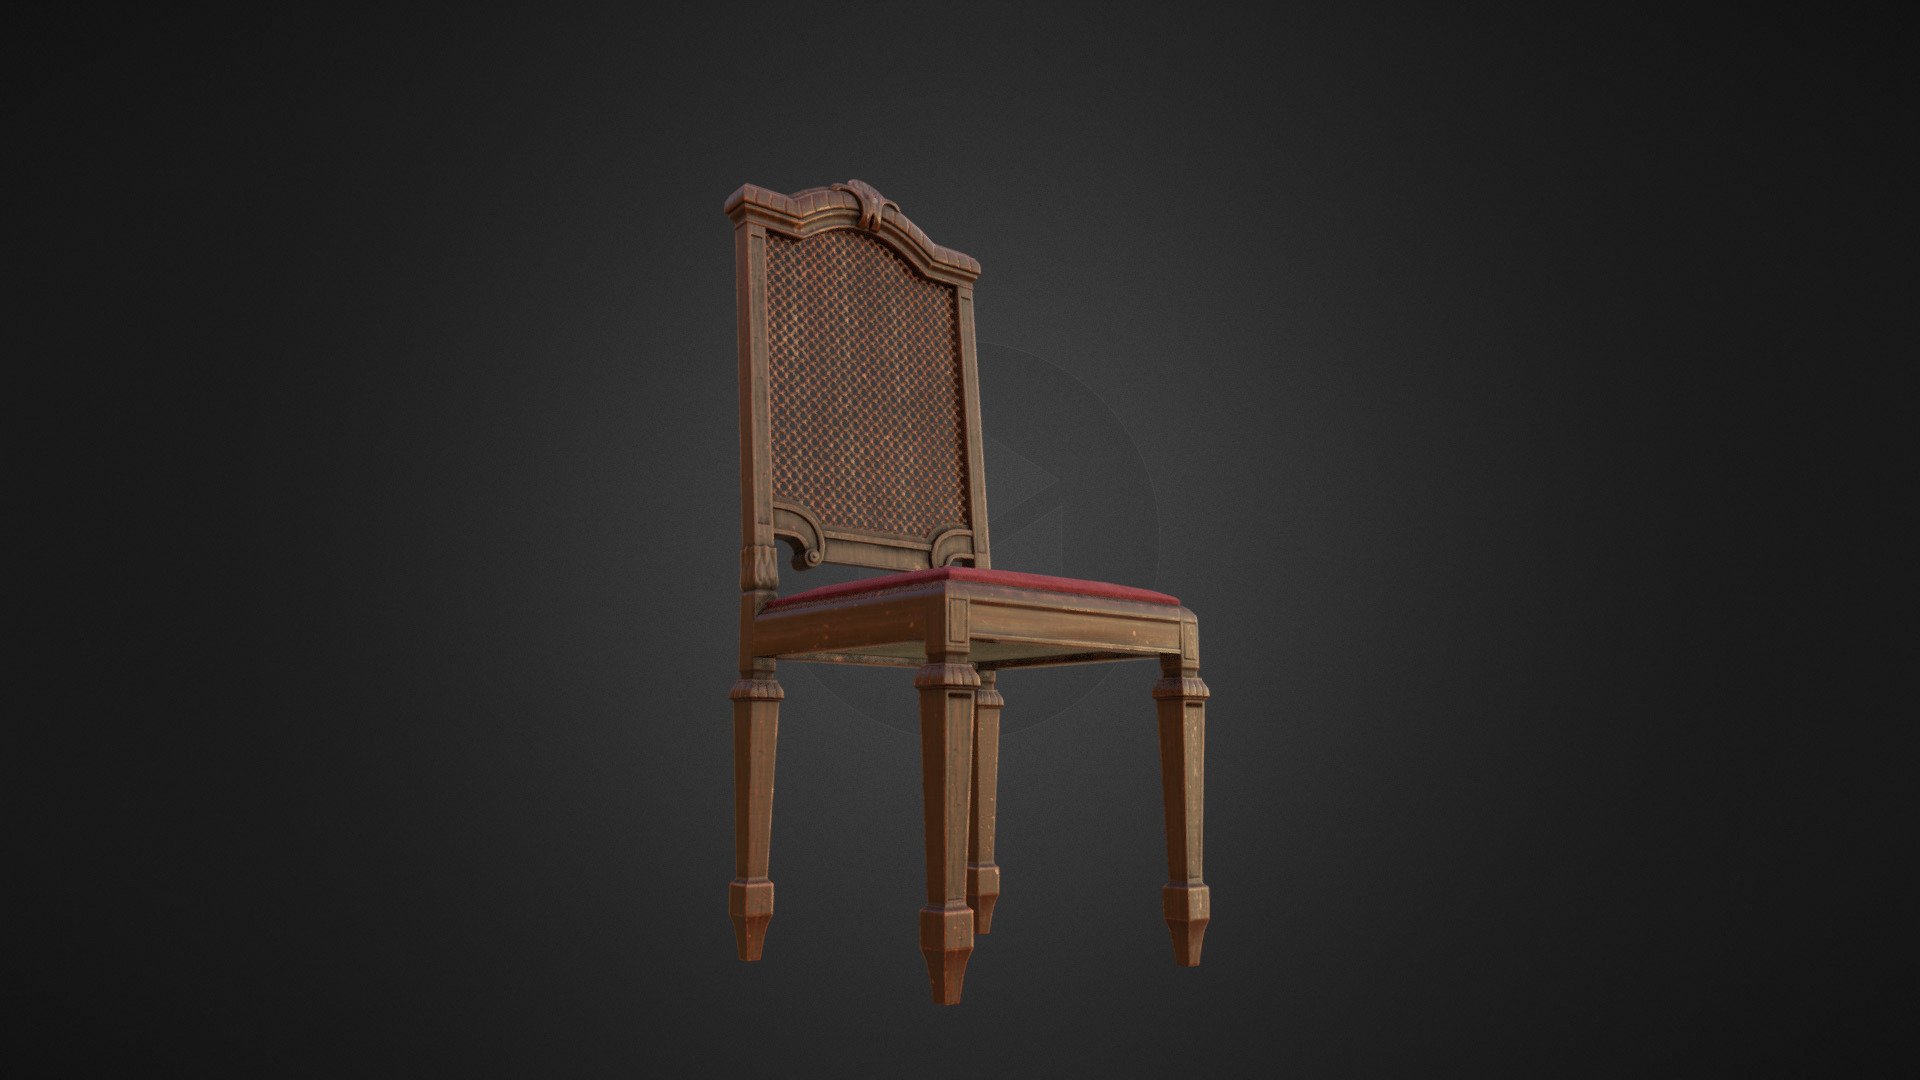 Made in Blender and Substance Painter - Antique small chair - Buy Royalty Free 3D model by simviz.net (@simonscat) 3d model